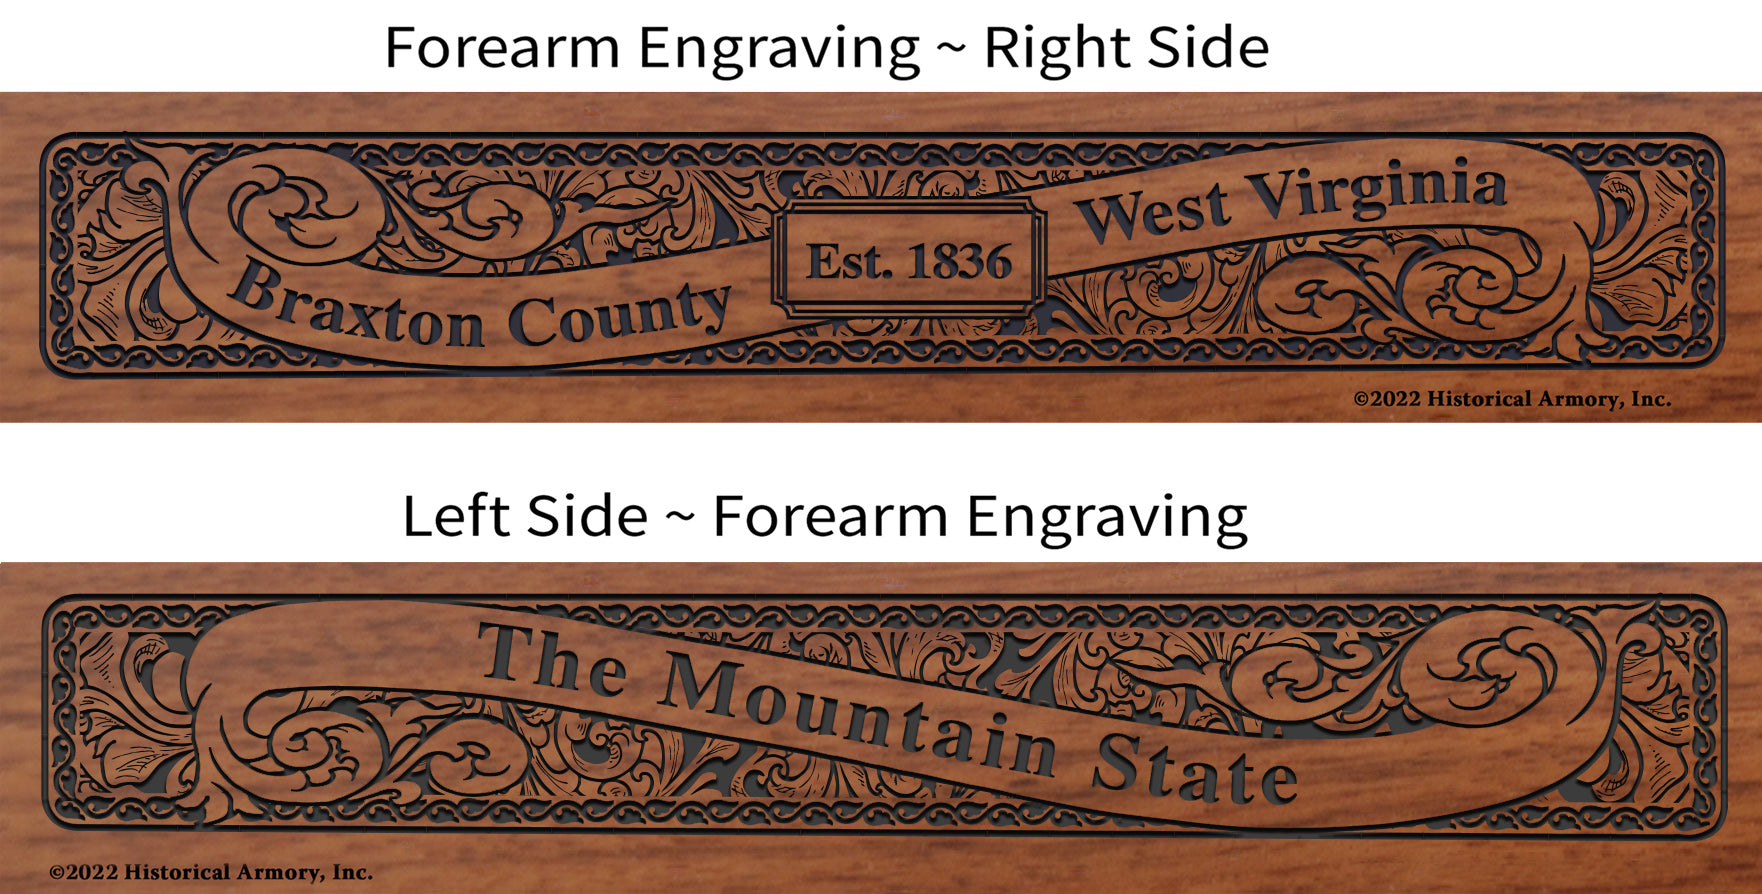 Braxton County West Virginia Engraved Rifle Forearm